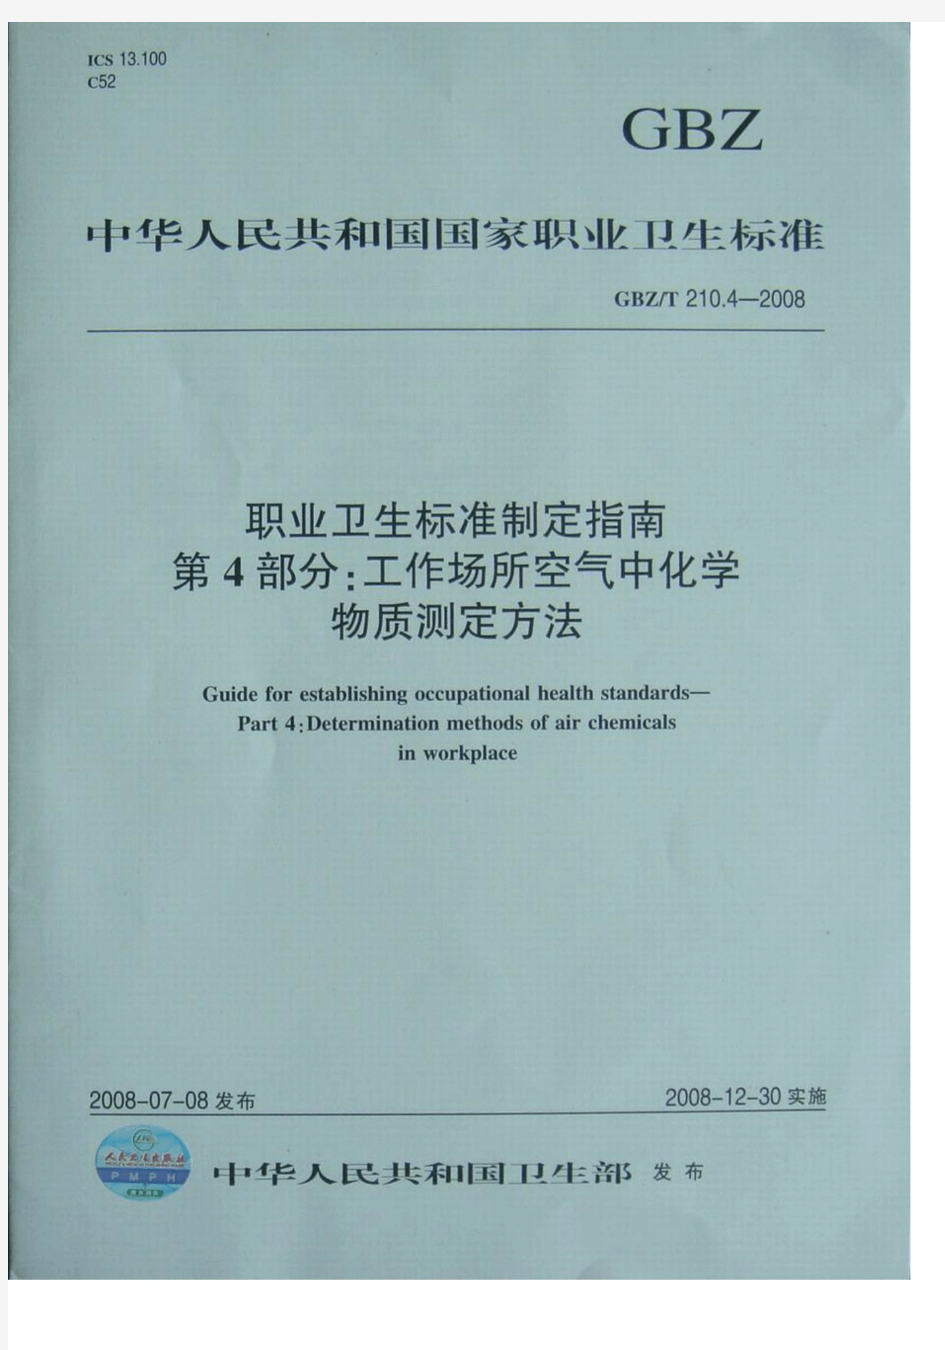 GBZ-T 210.4-2008 职业卫生标准制定指南 第4部分工作场所空气中化学物质测定方法